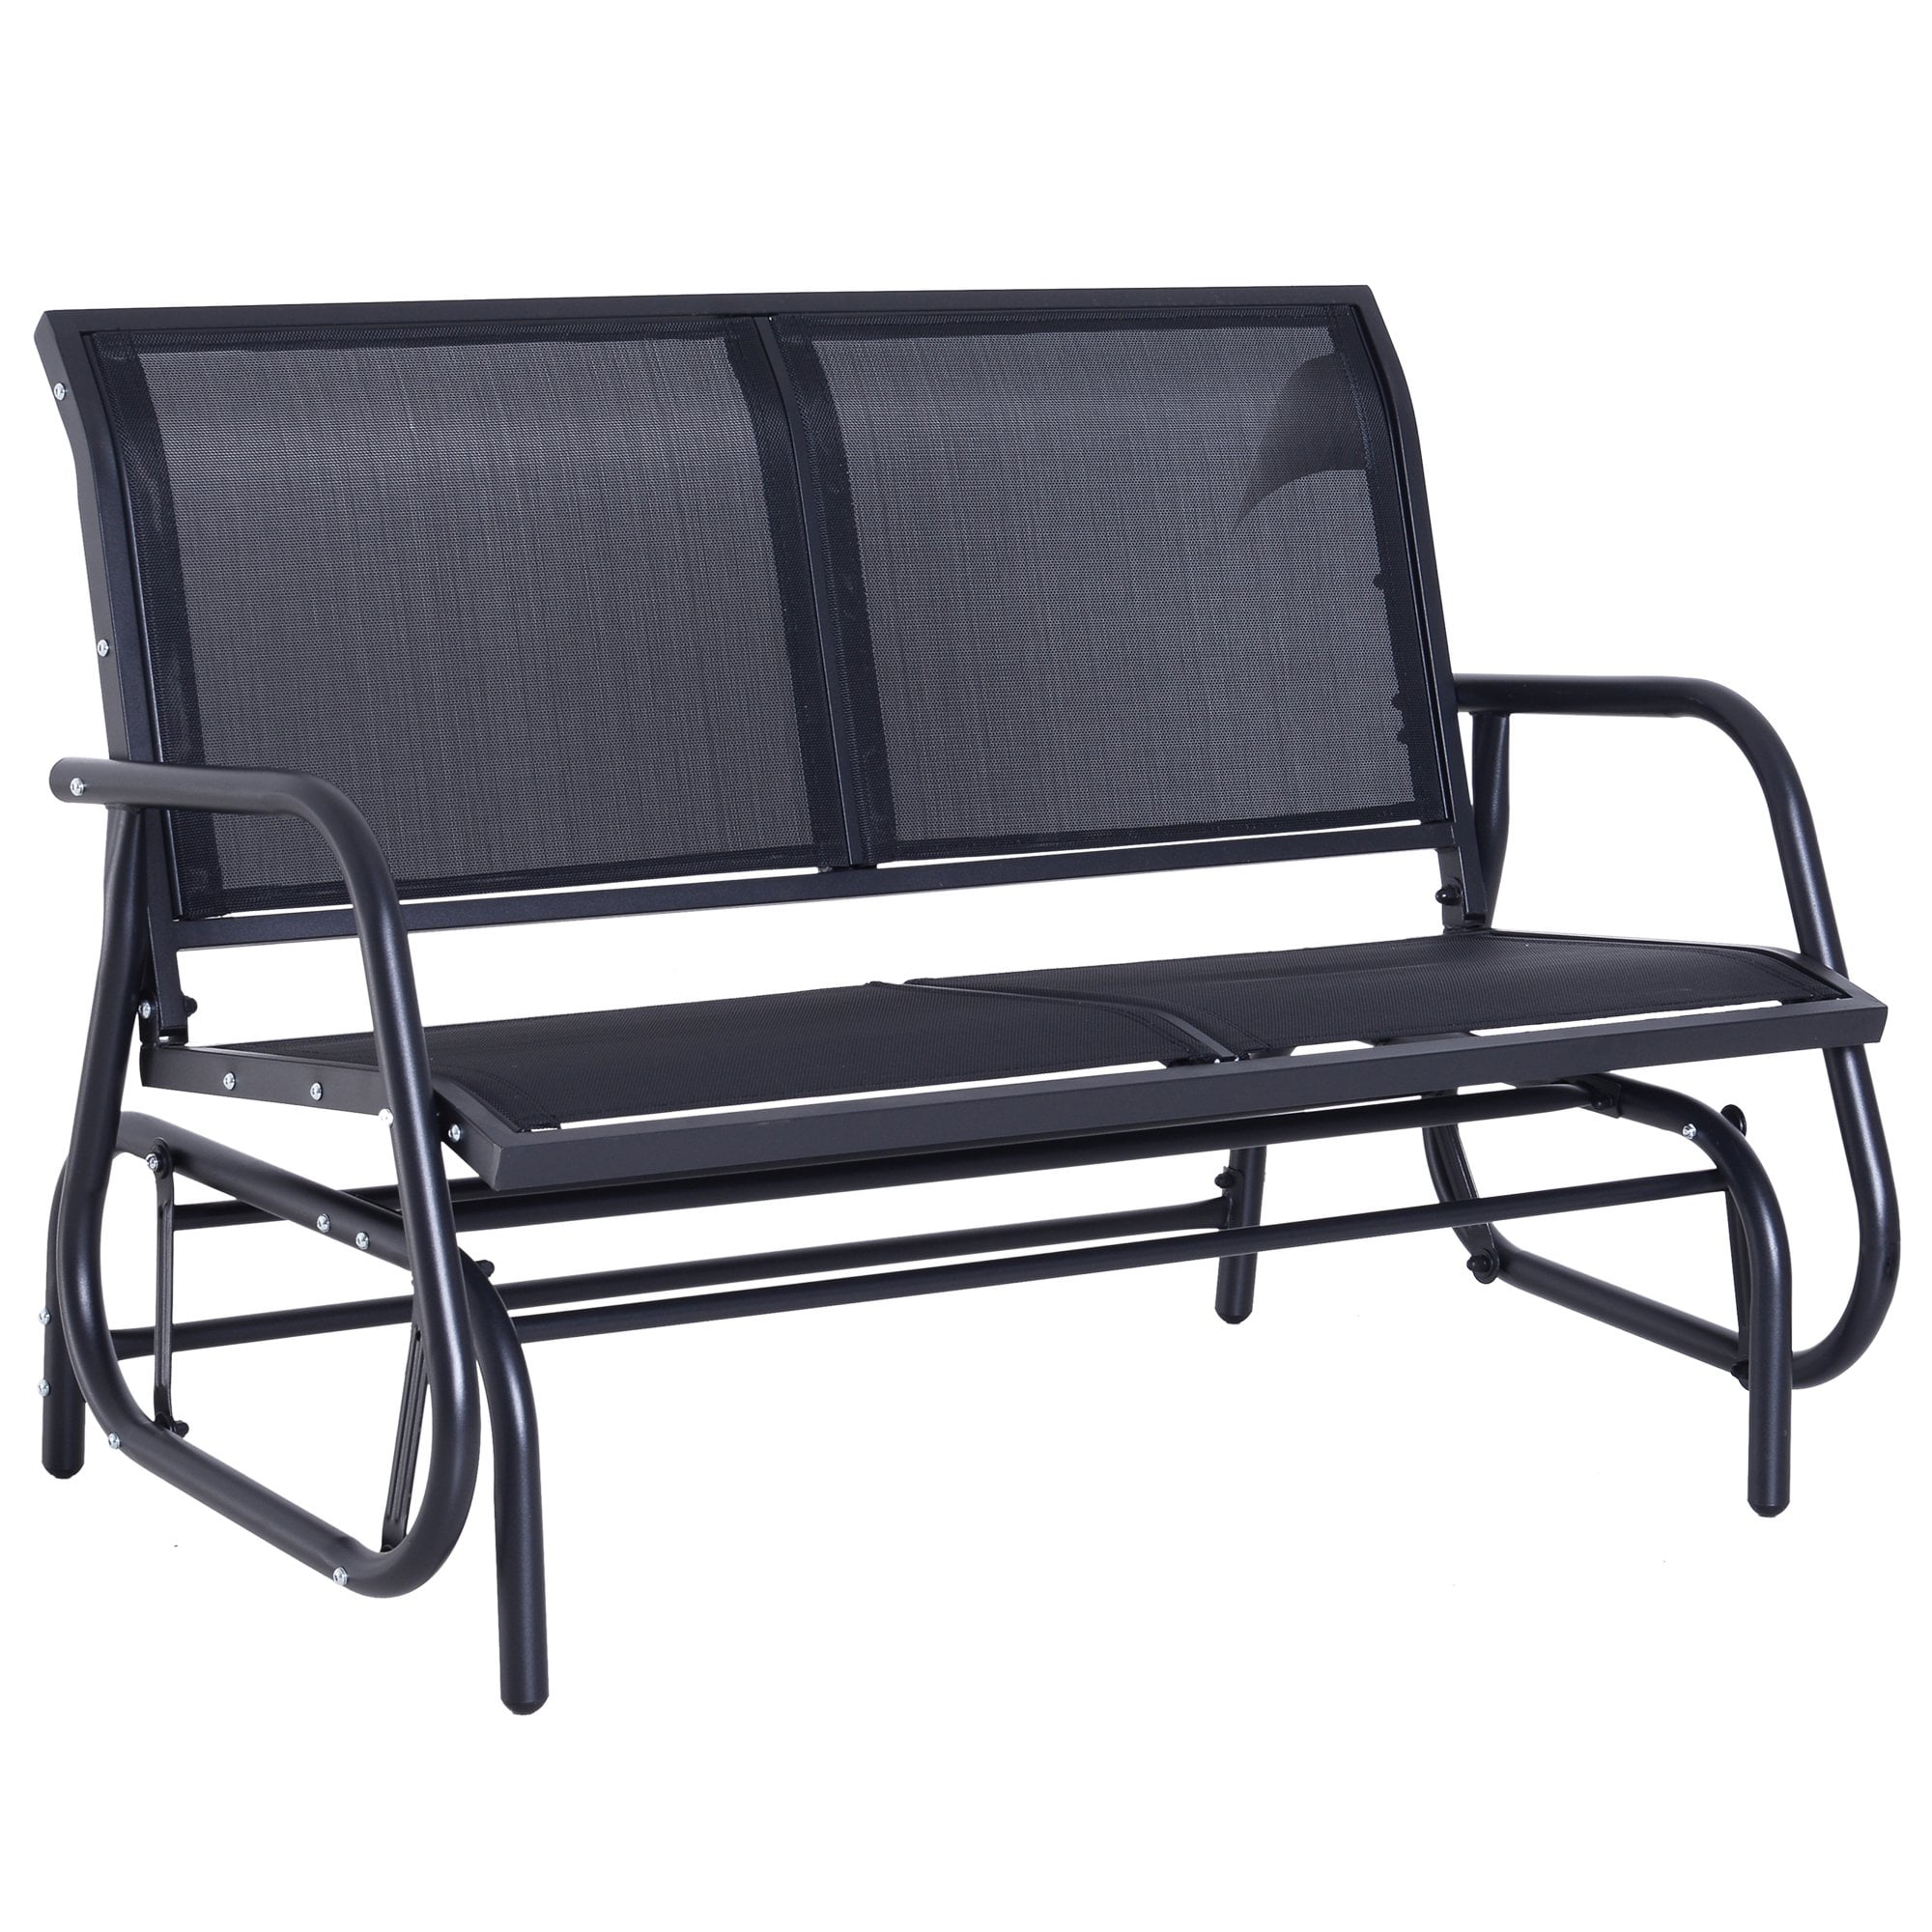 48" Outdoor Patio Swing Glider Bench Chair Loveseat Rocker Lounge Backyard Grey 